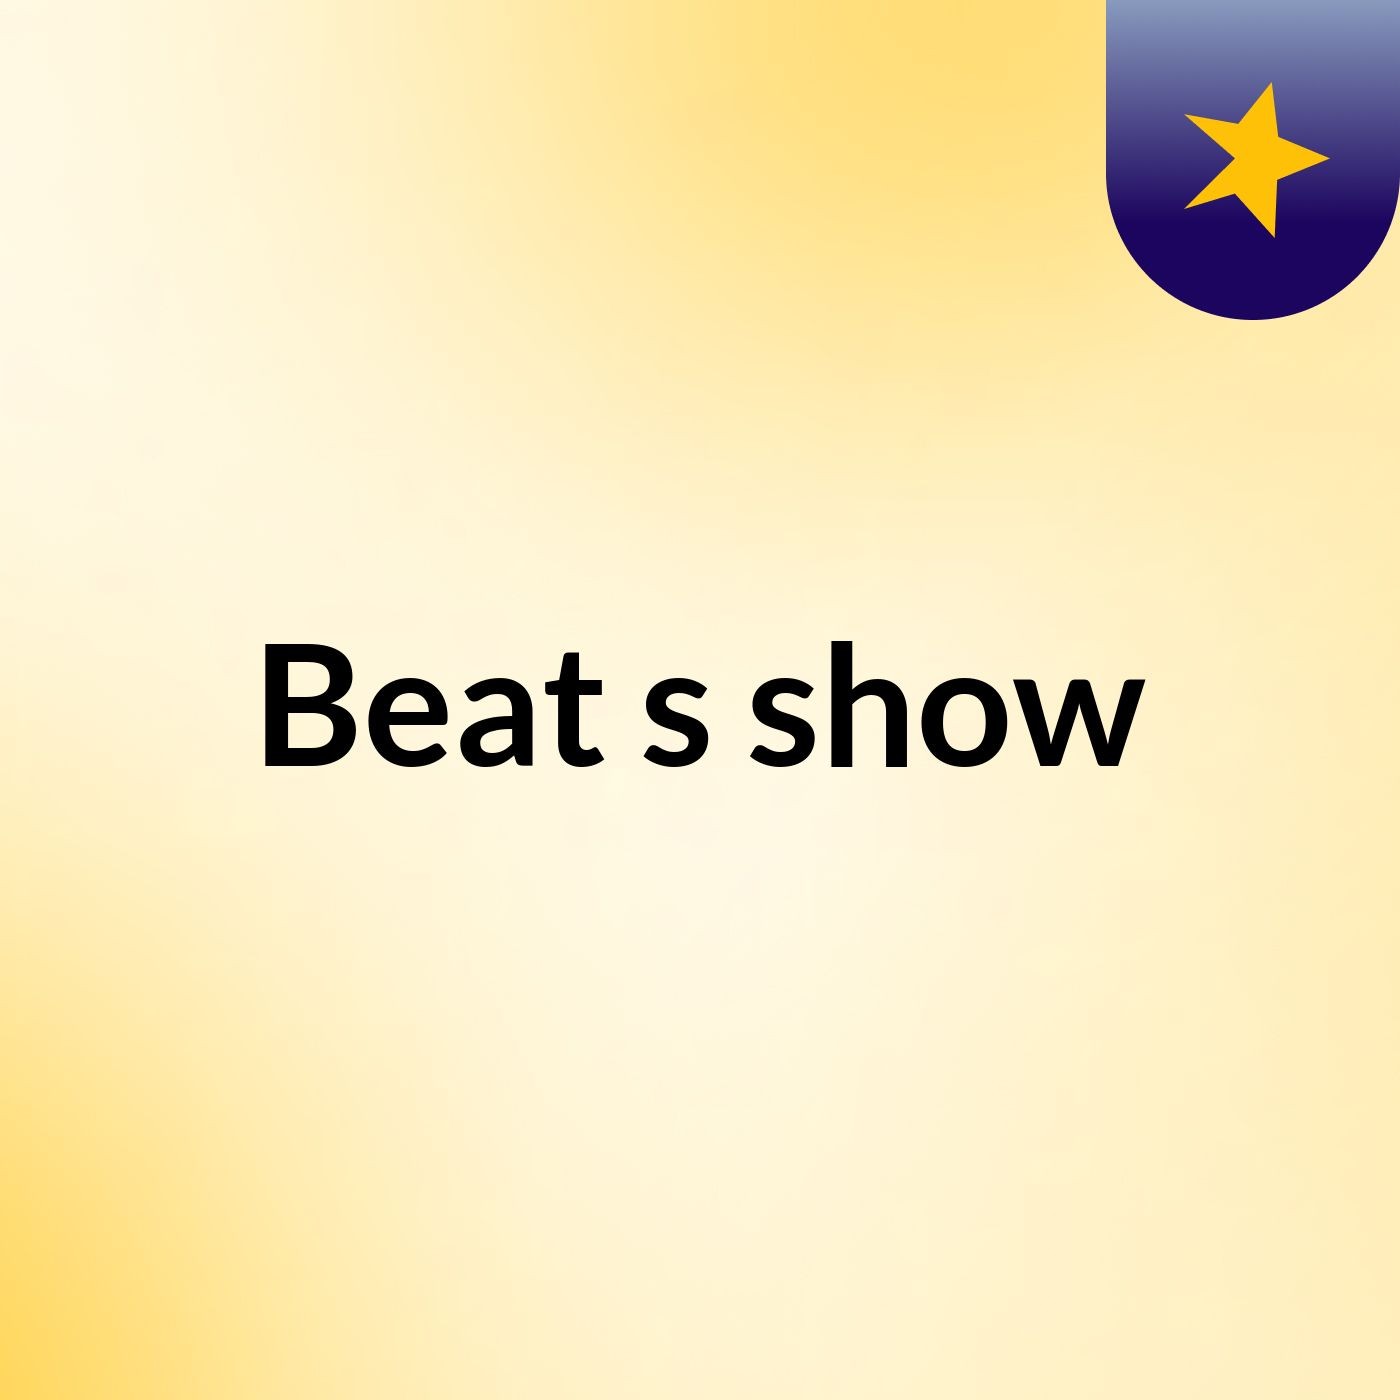 Beat's show